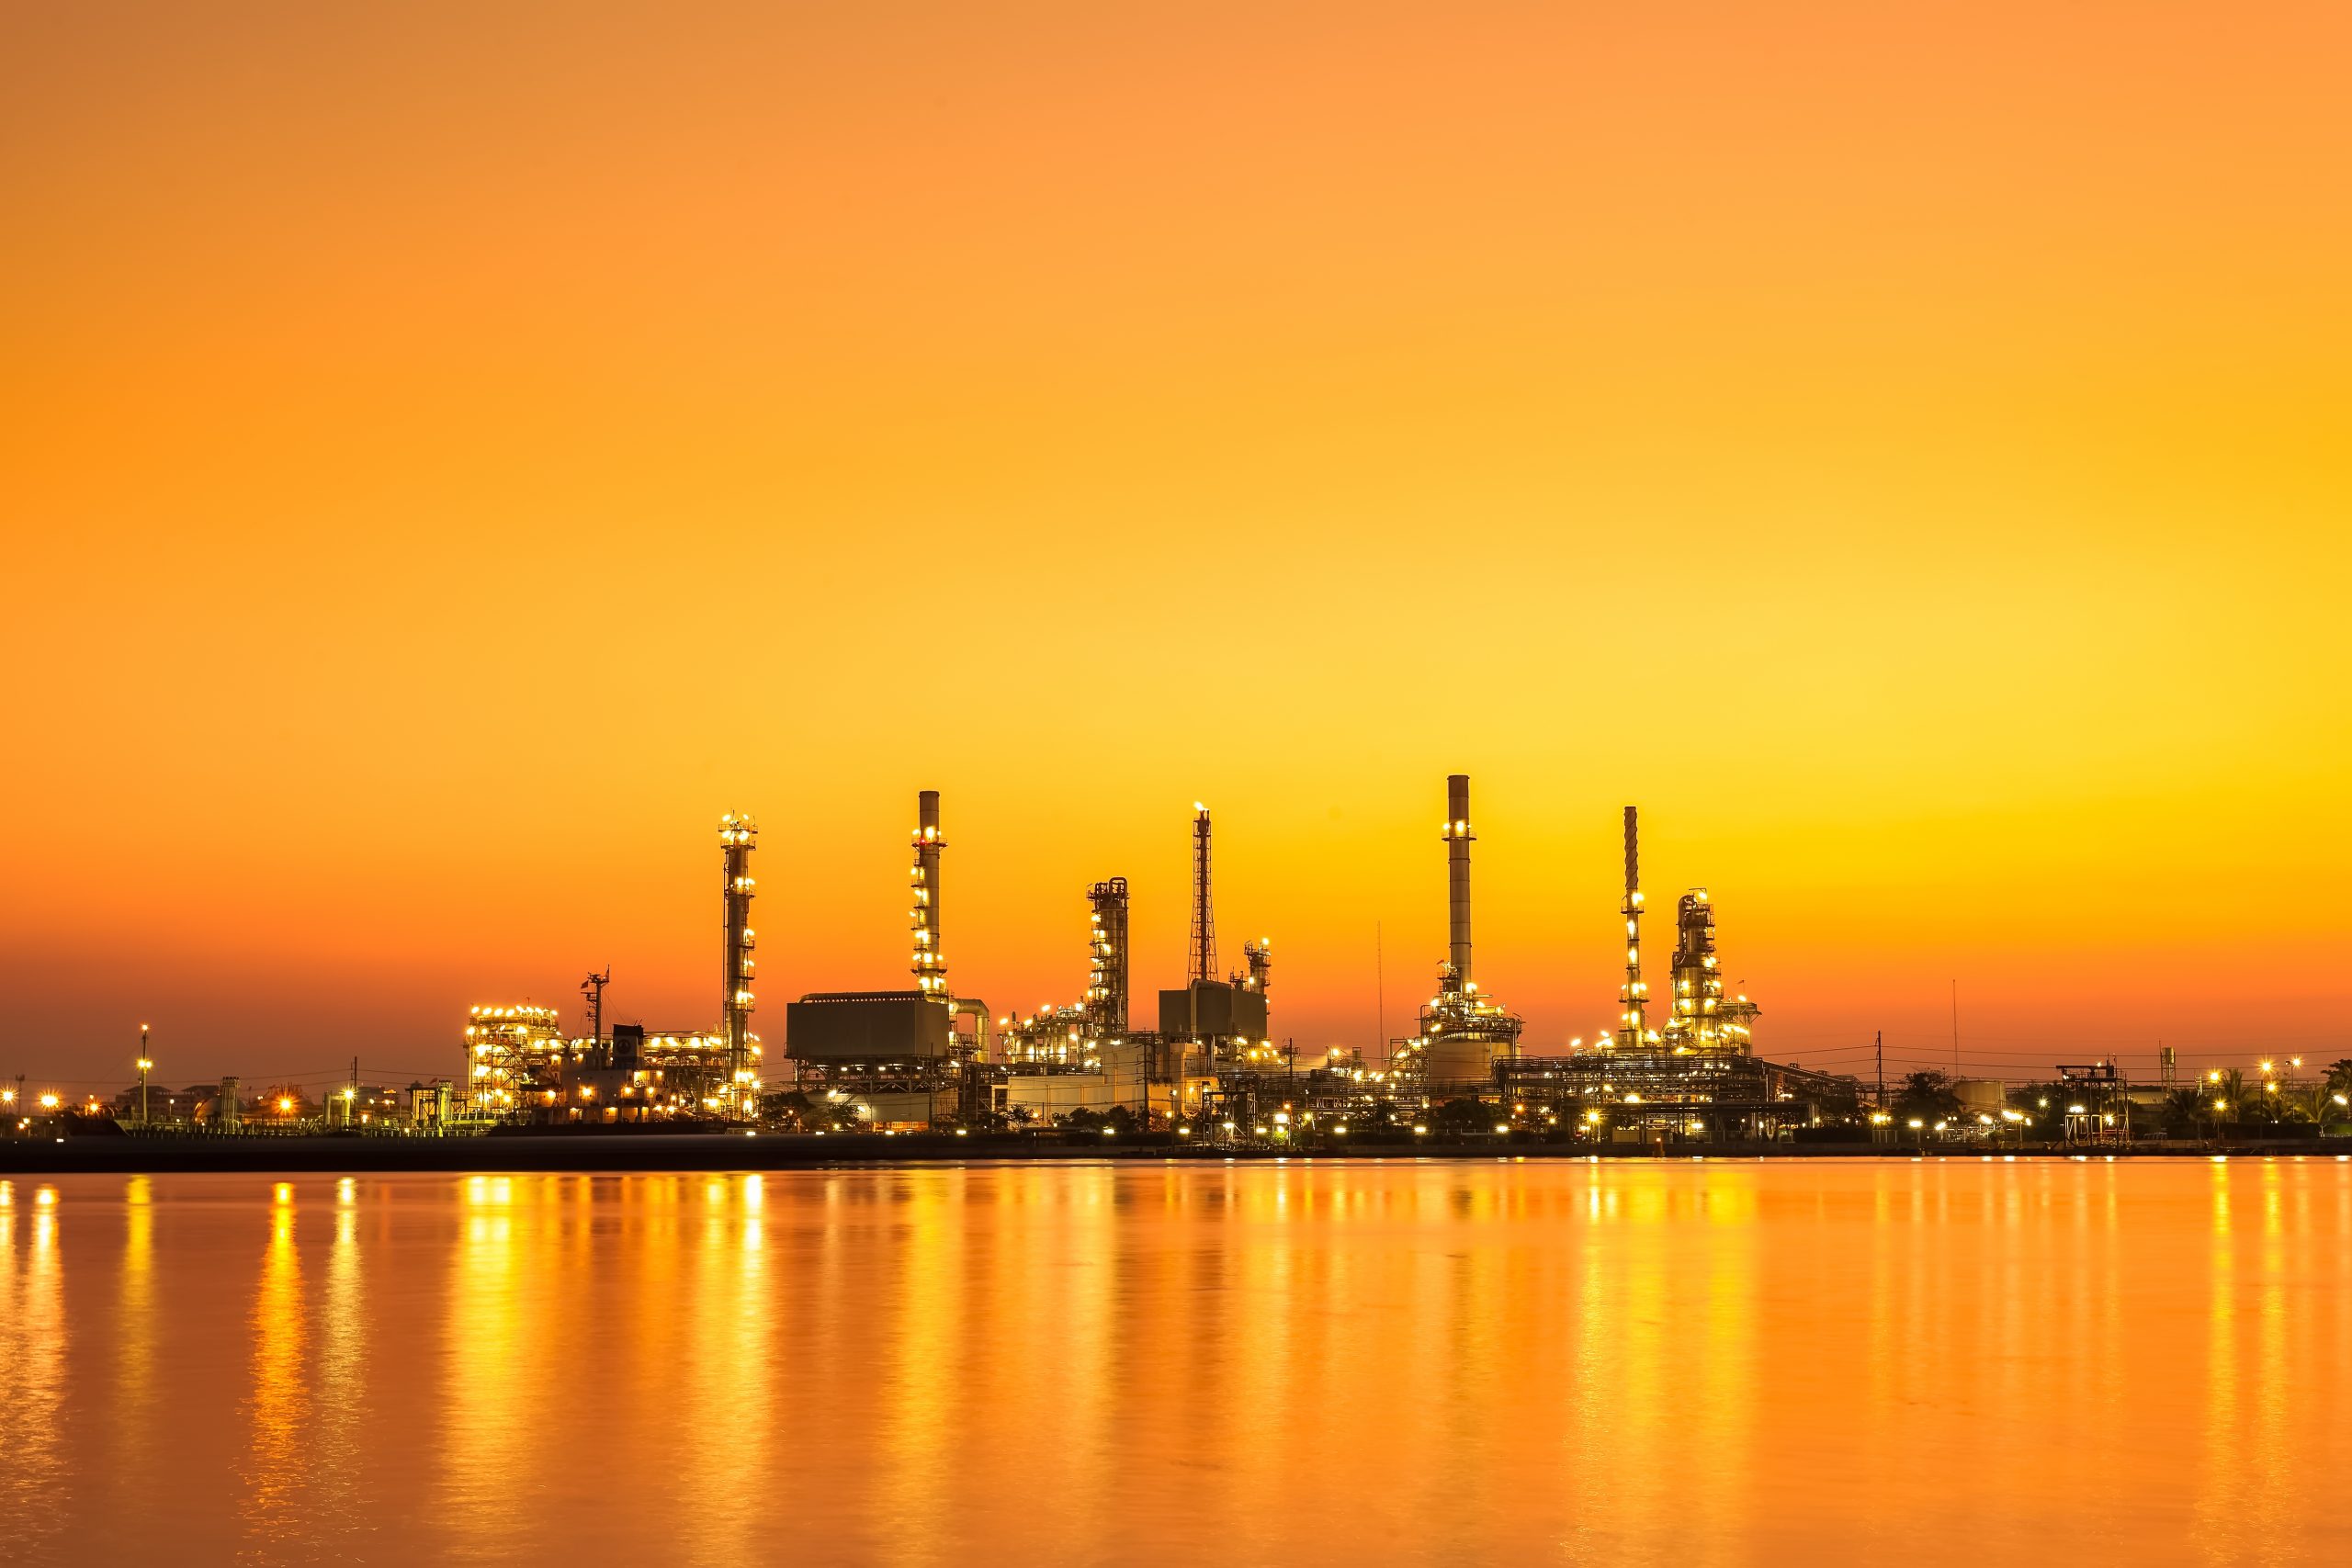 Oil refinery factory at sunrise, Bangkok Thailand